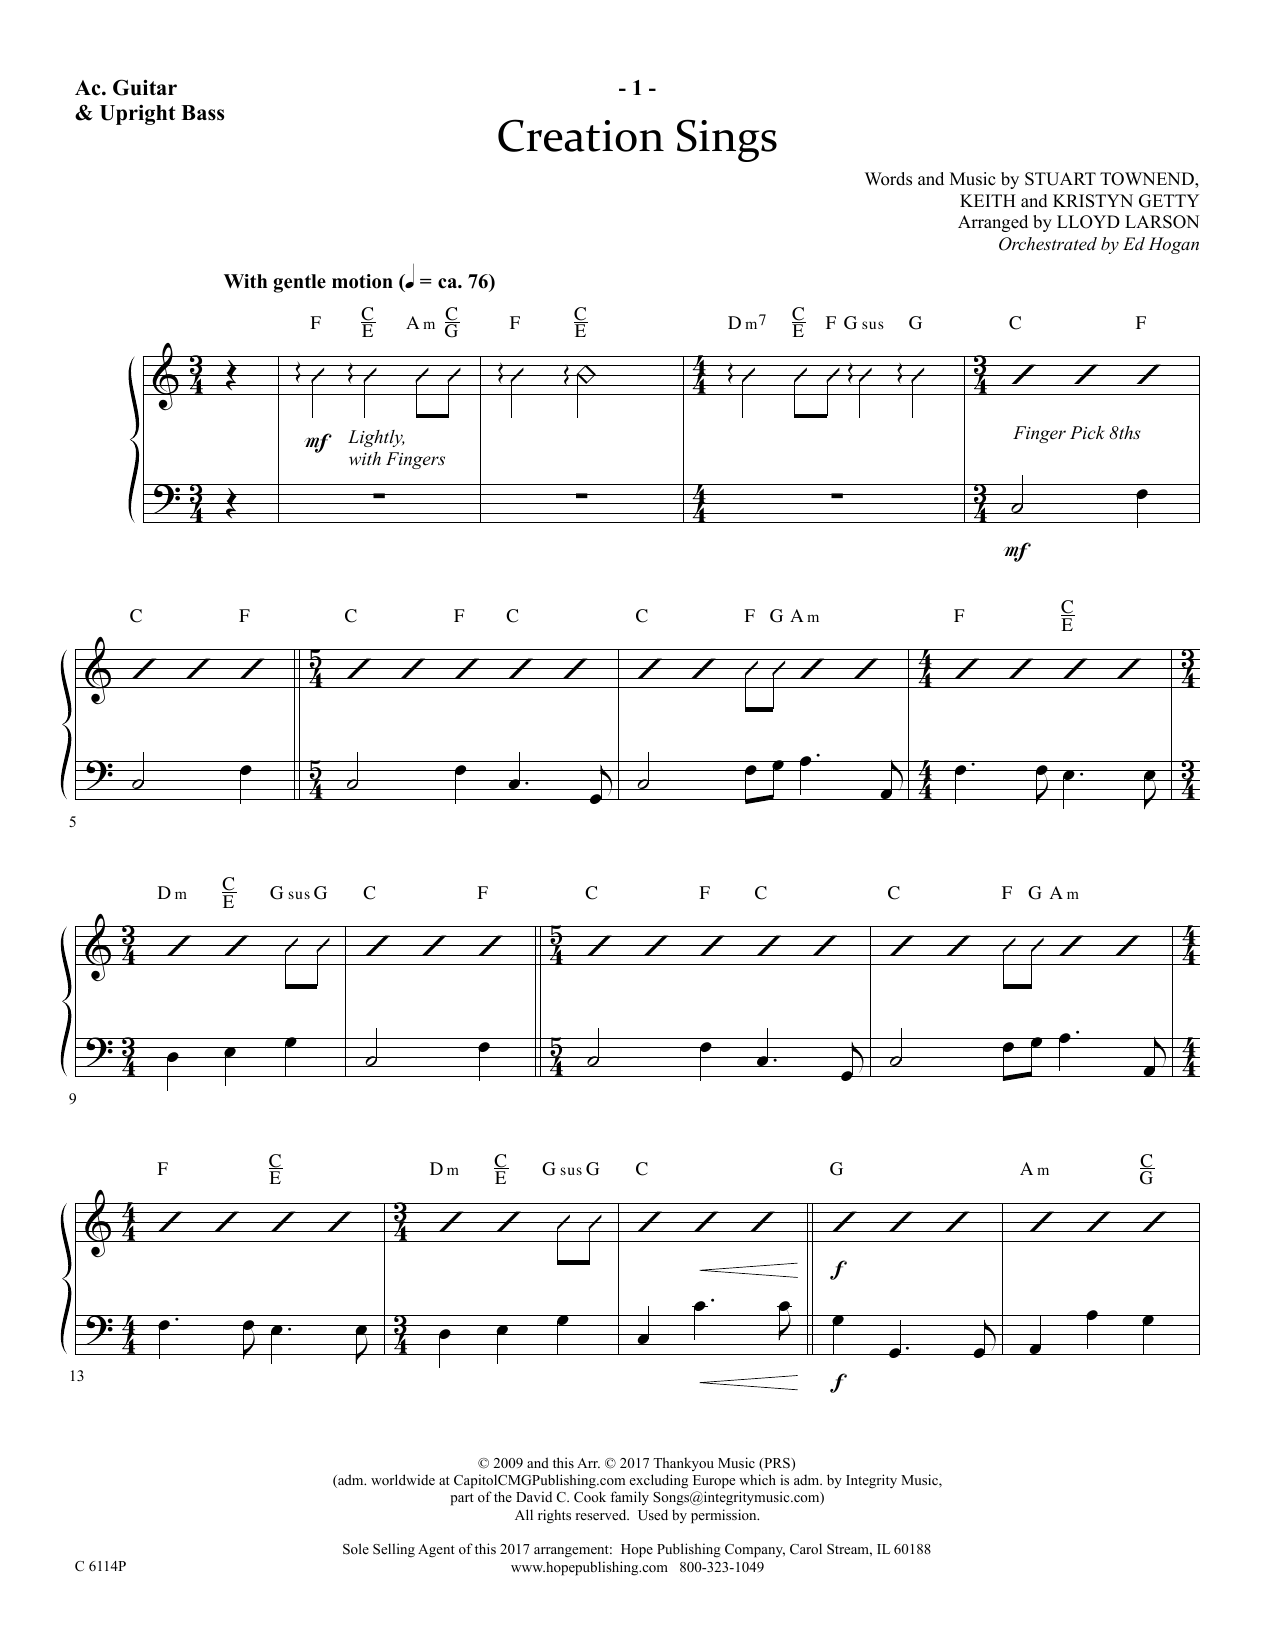 Lloyd Larson Creation Sings - Acoustic Guitar/Electric Bass Sheet Music Notes & Chords for Choir Instrumental Pak - Download or Print PDF